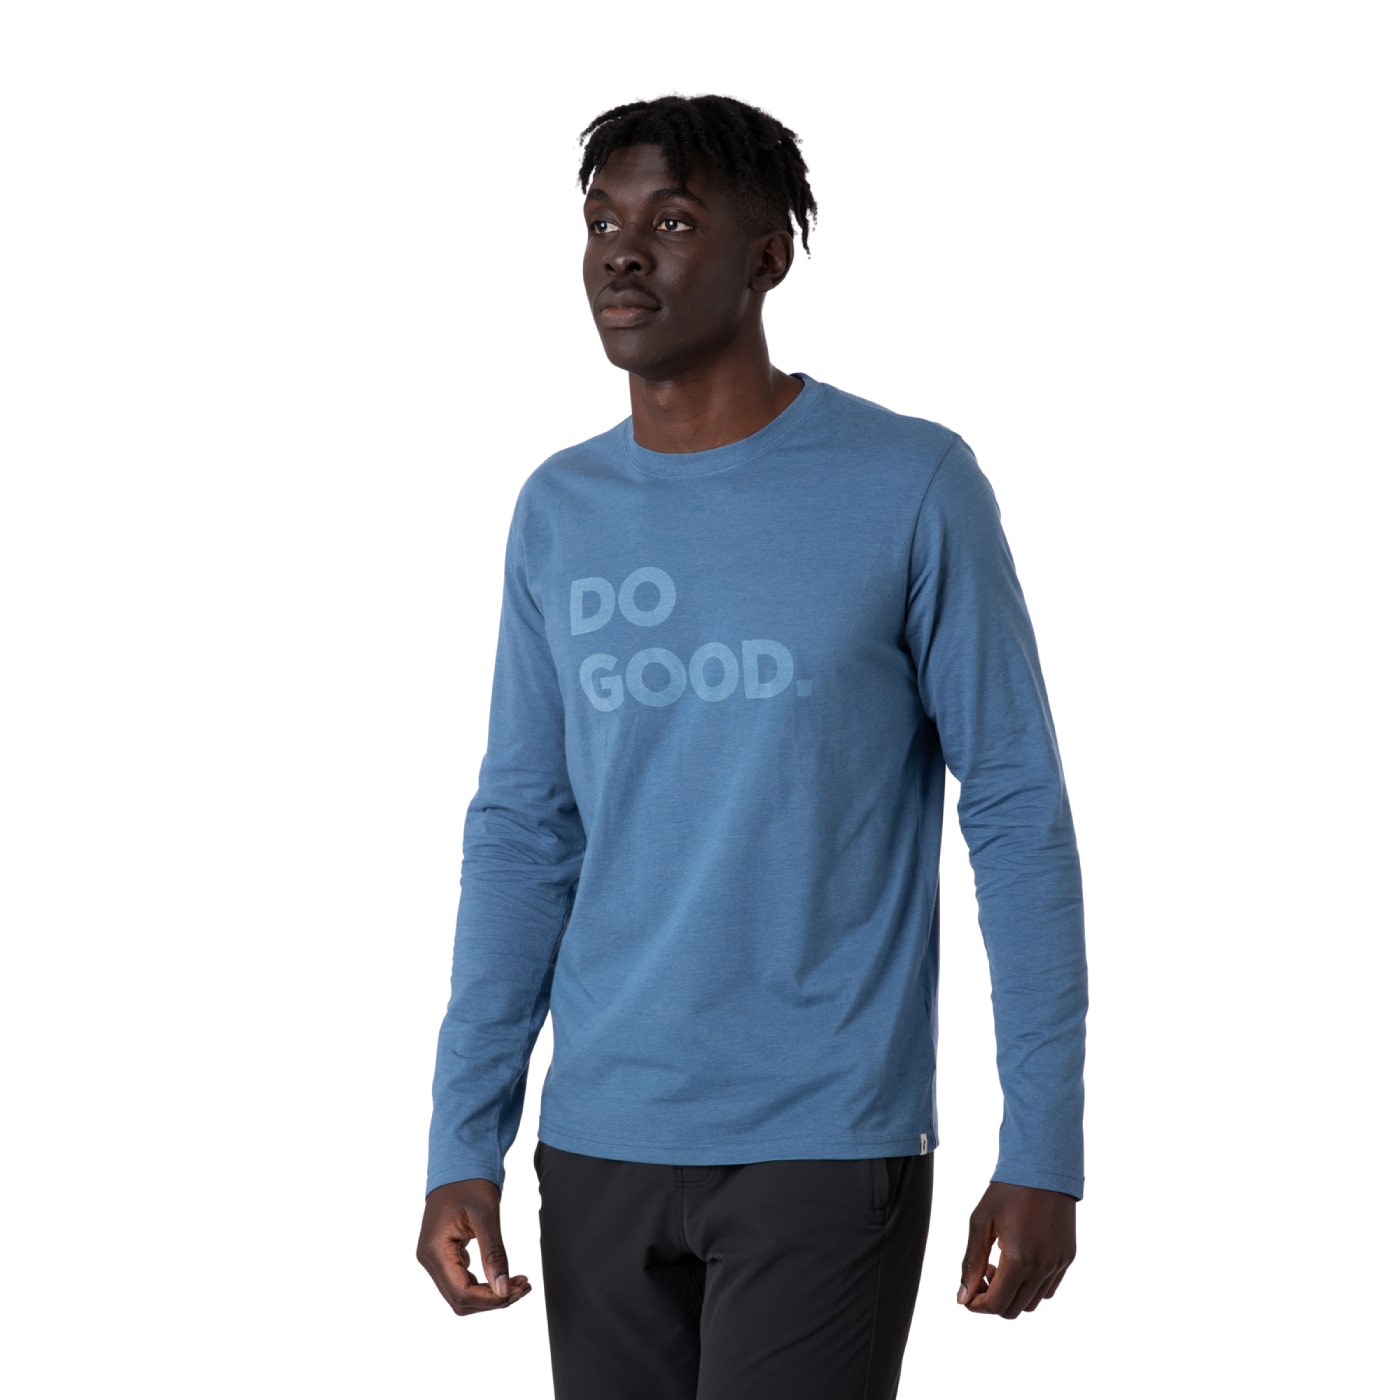 Cotopaxi Men's Long Sleeve Do Good T-Shirt 